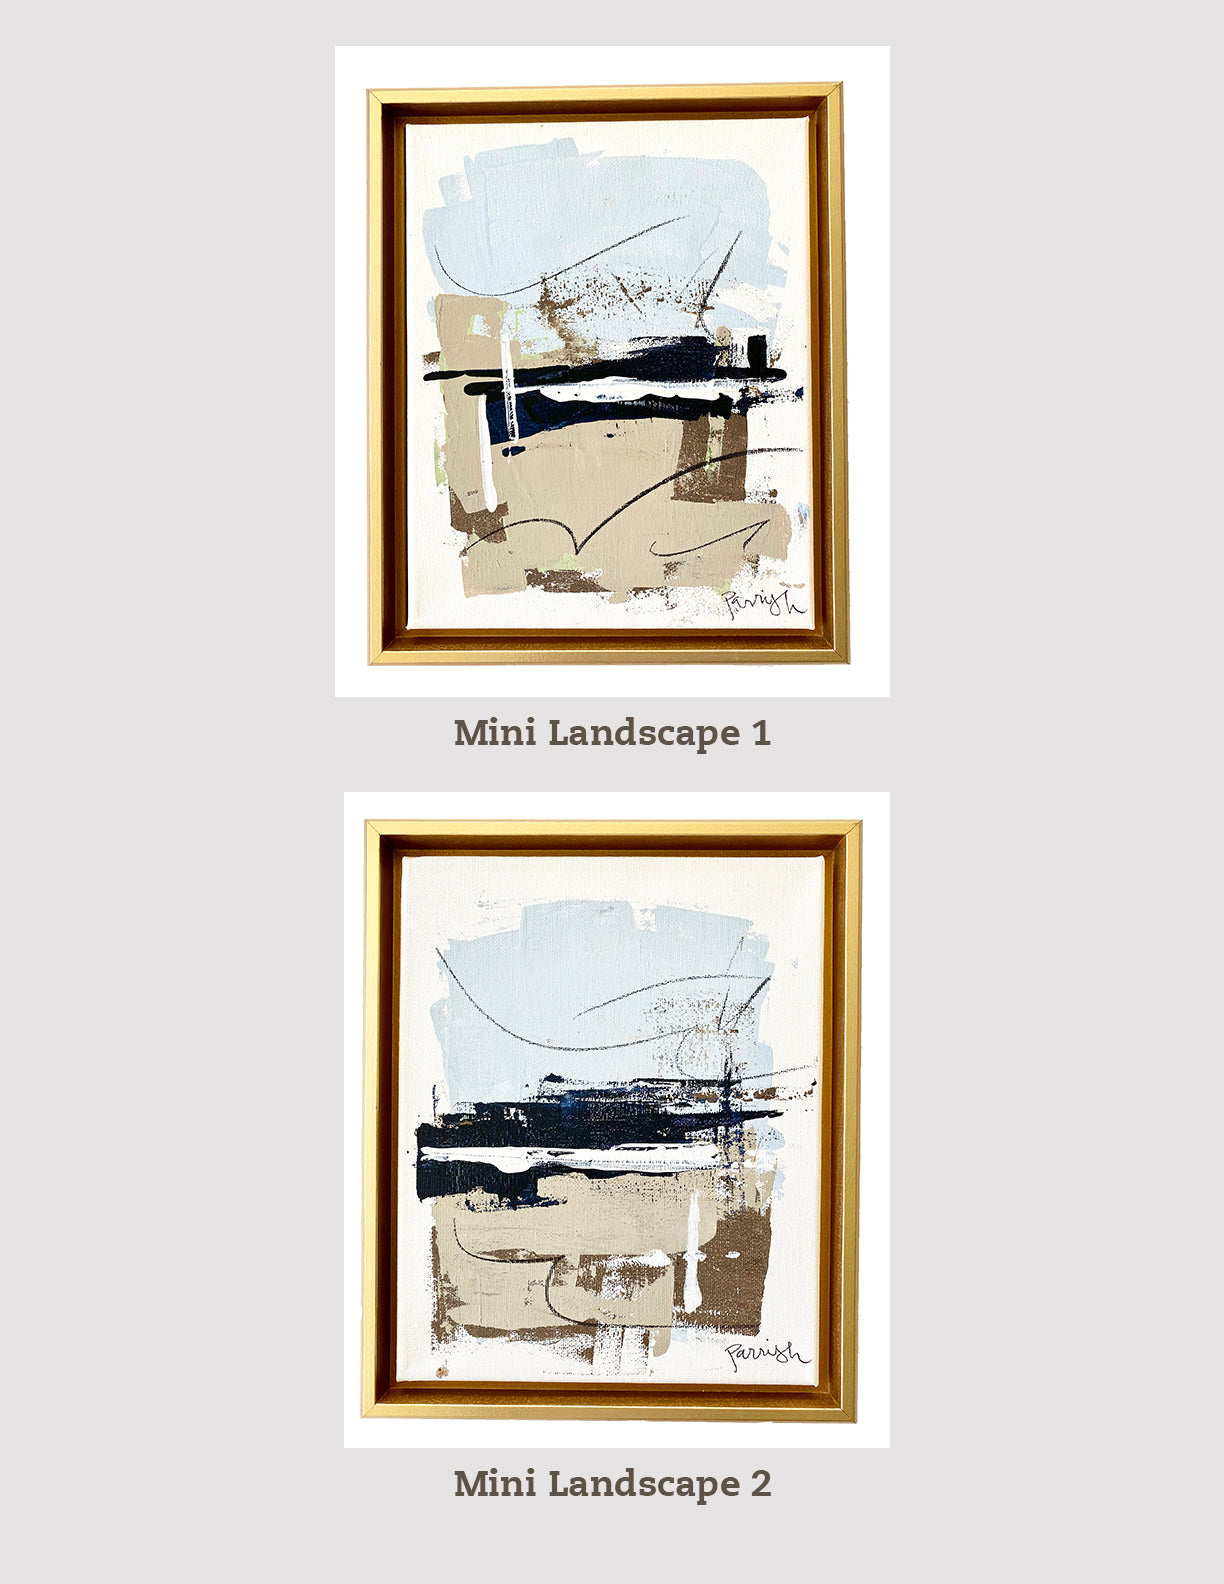 Mini Landscape 1 - 8x10"